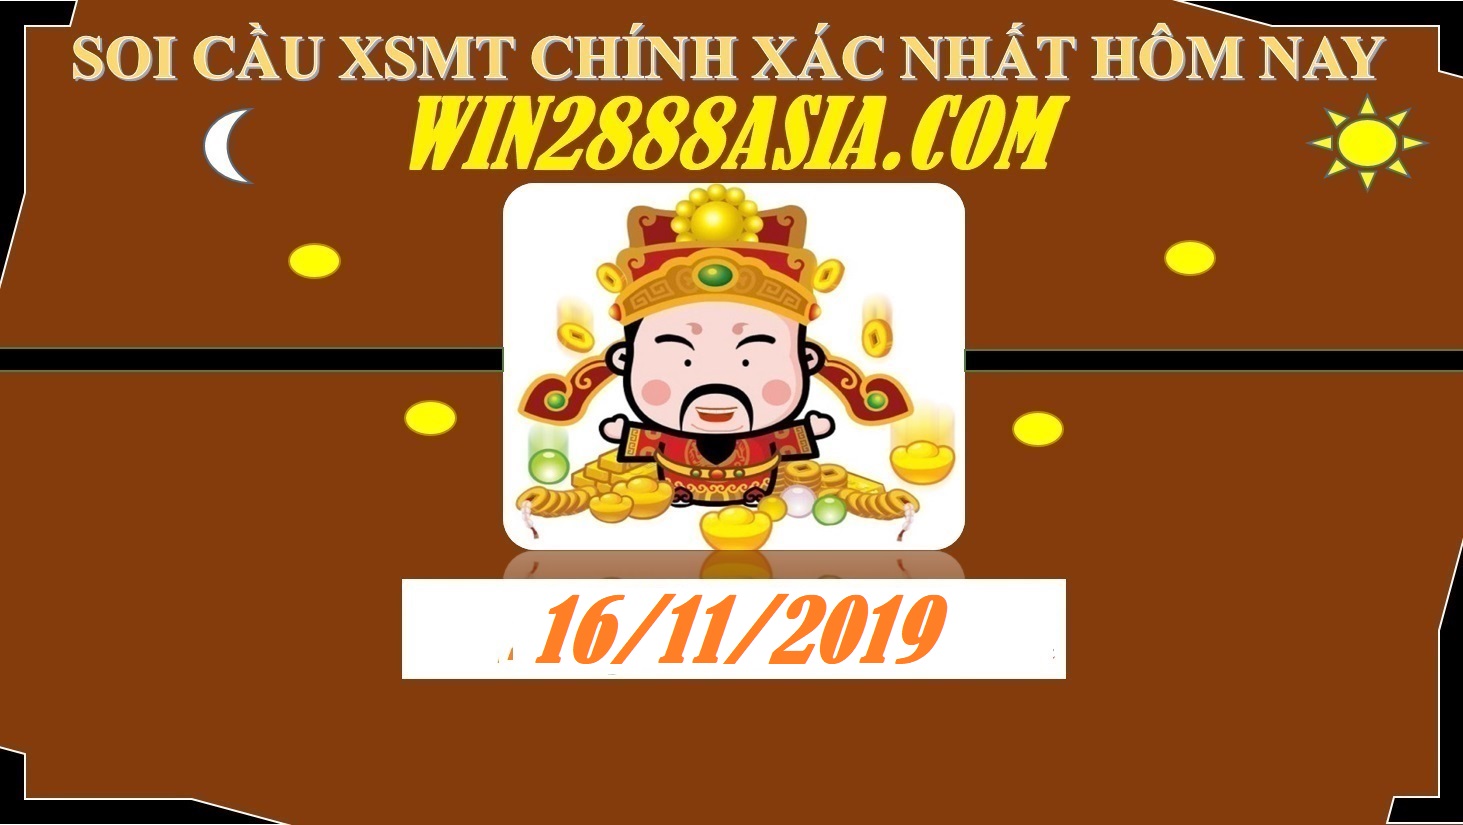 Soi cầu XSMT 16-11-2019 Win2888 Dự đoán Lô đề Miền Trung thứ 7